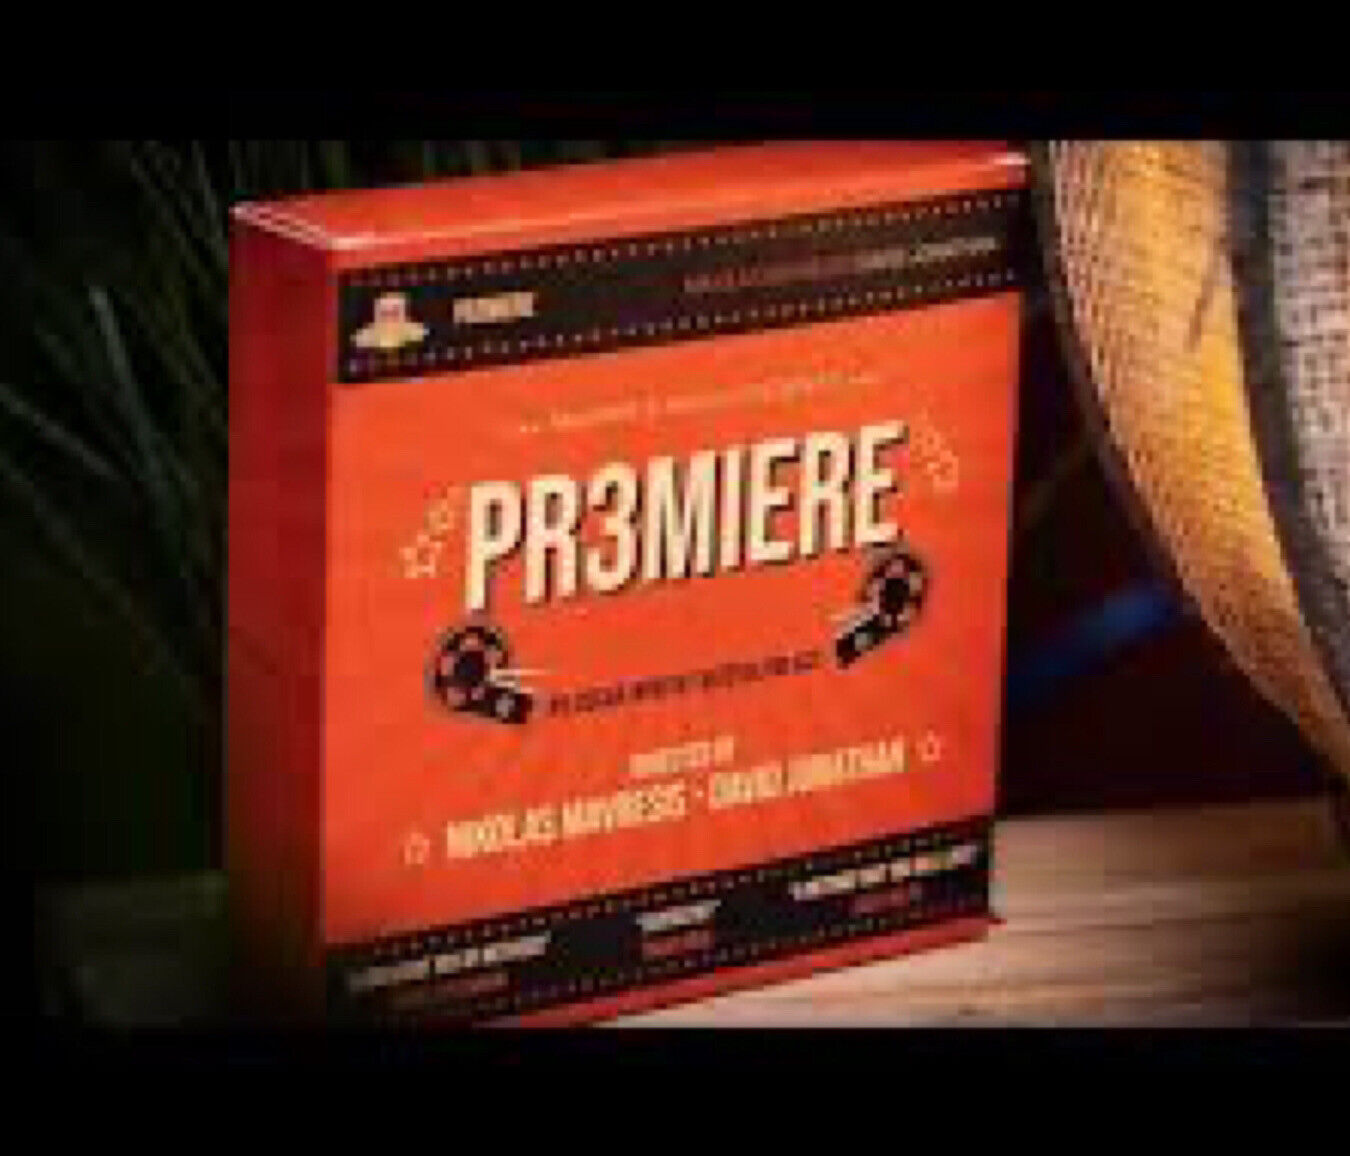 Pr3miere (Premiere) by Nikolas Mavresis and David Jonathan-Fooled Craig Petty